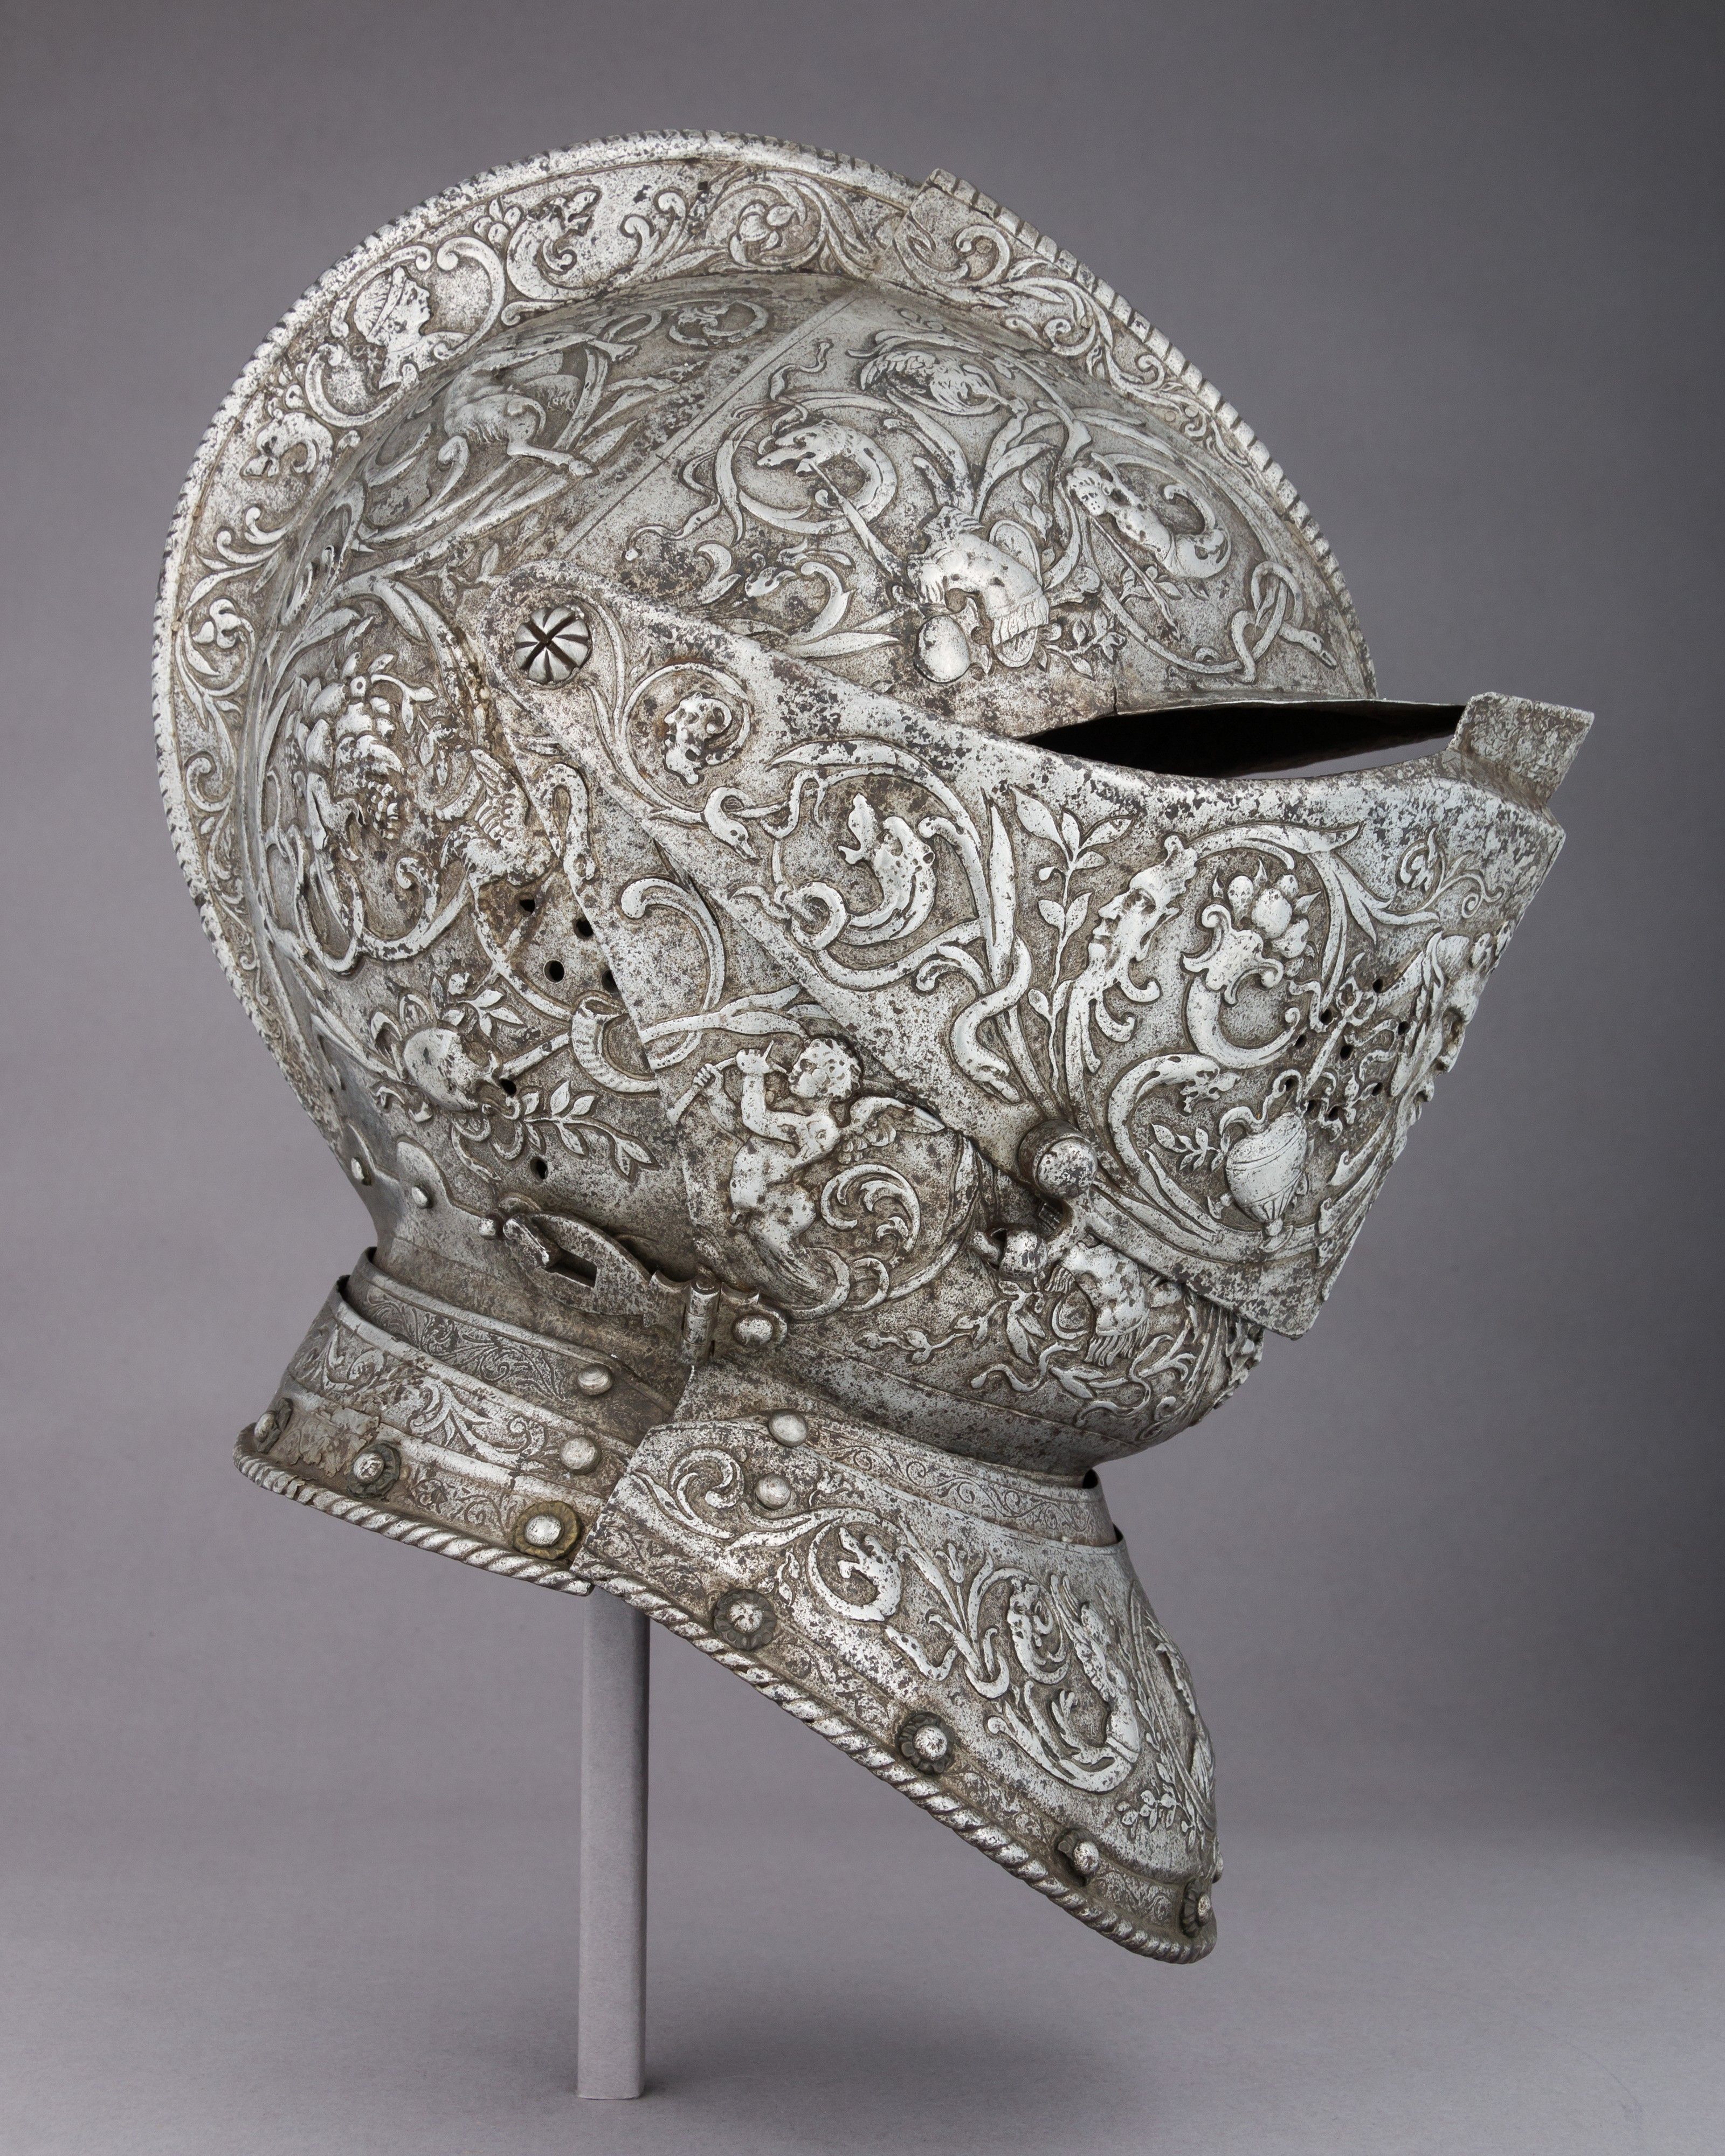 General 3200x4000 helmet medieval medieval clothes engraving armor portrait display side view floral